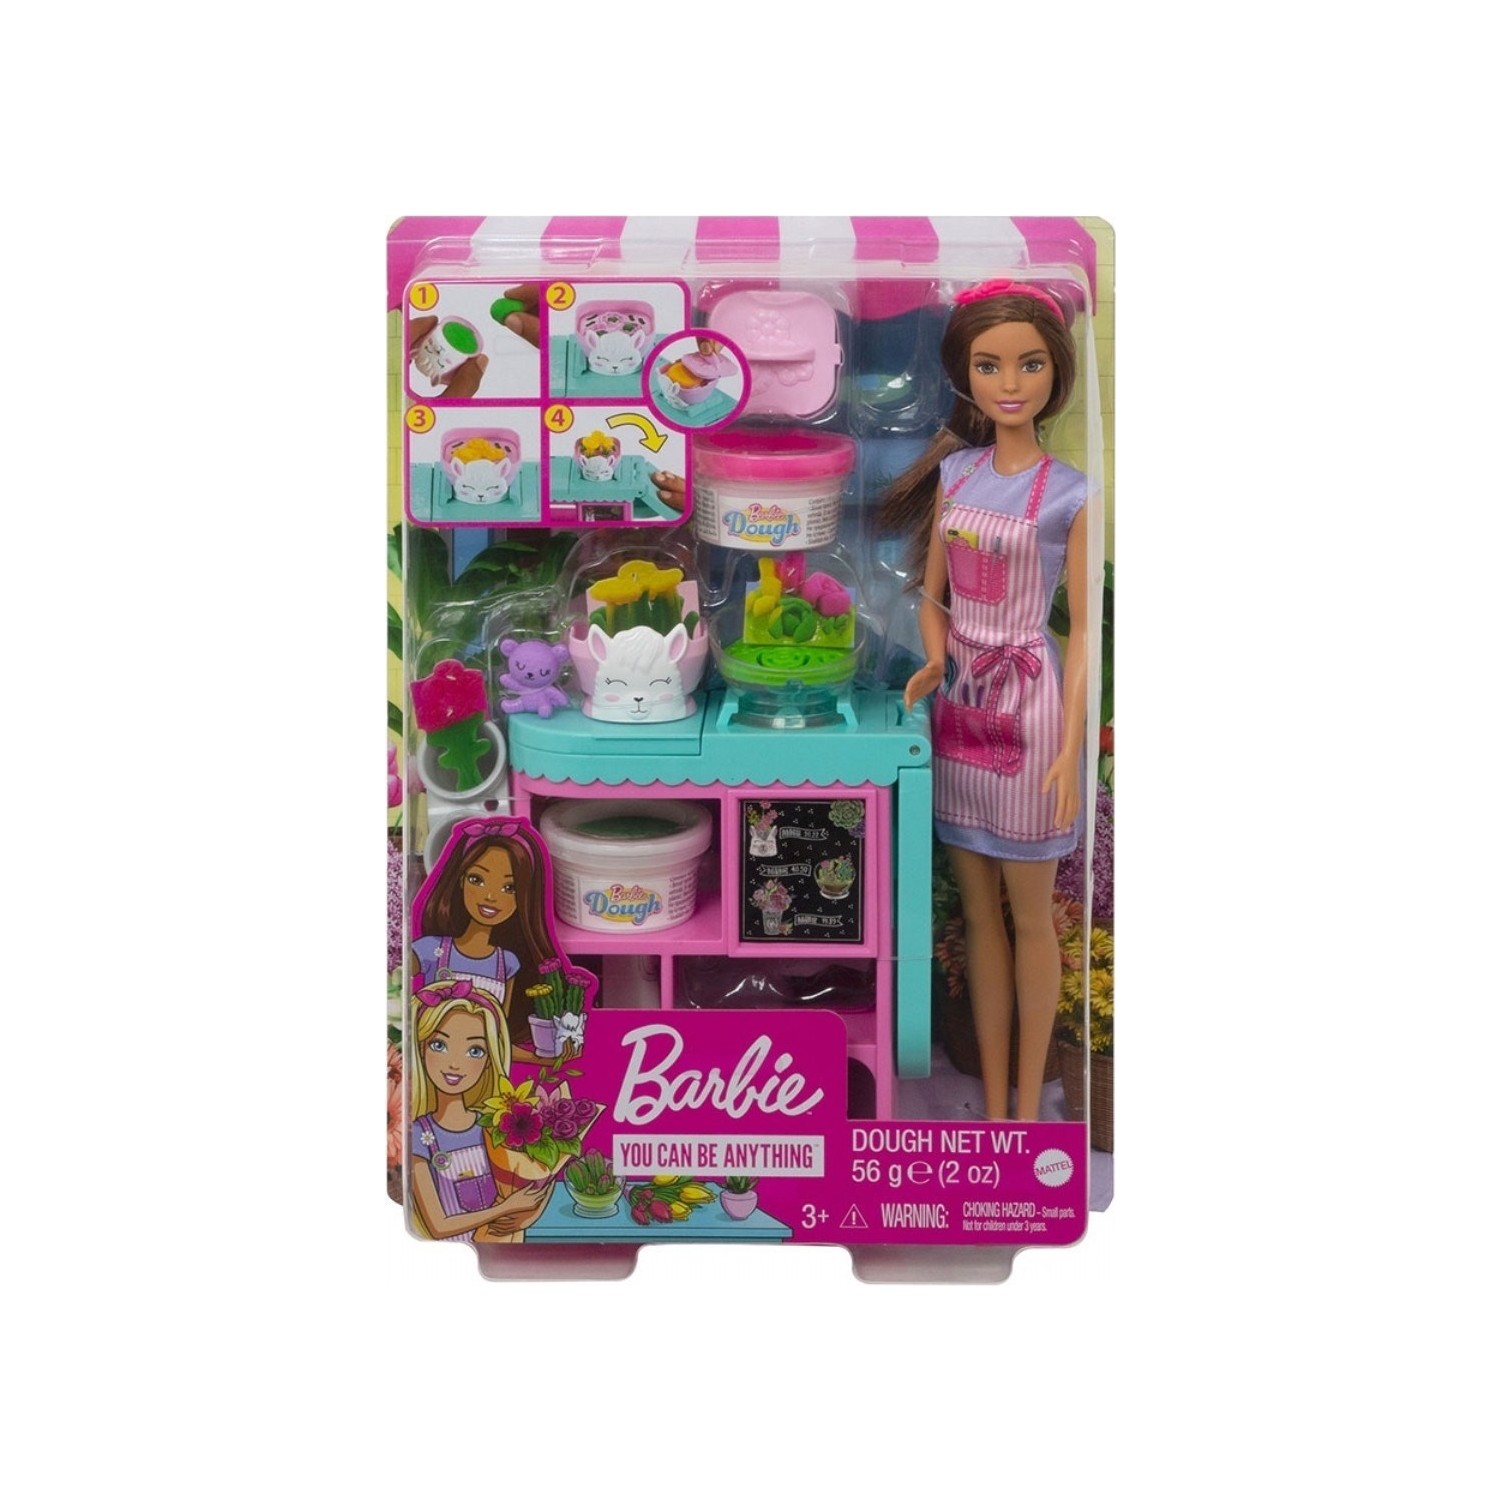 Кукла Barbie Чичекчи и игровой набор игровой набор с барби и аксессуарами кукла барби для девочки барби со съемными нарядами кукла набор аксессуаров для барби